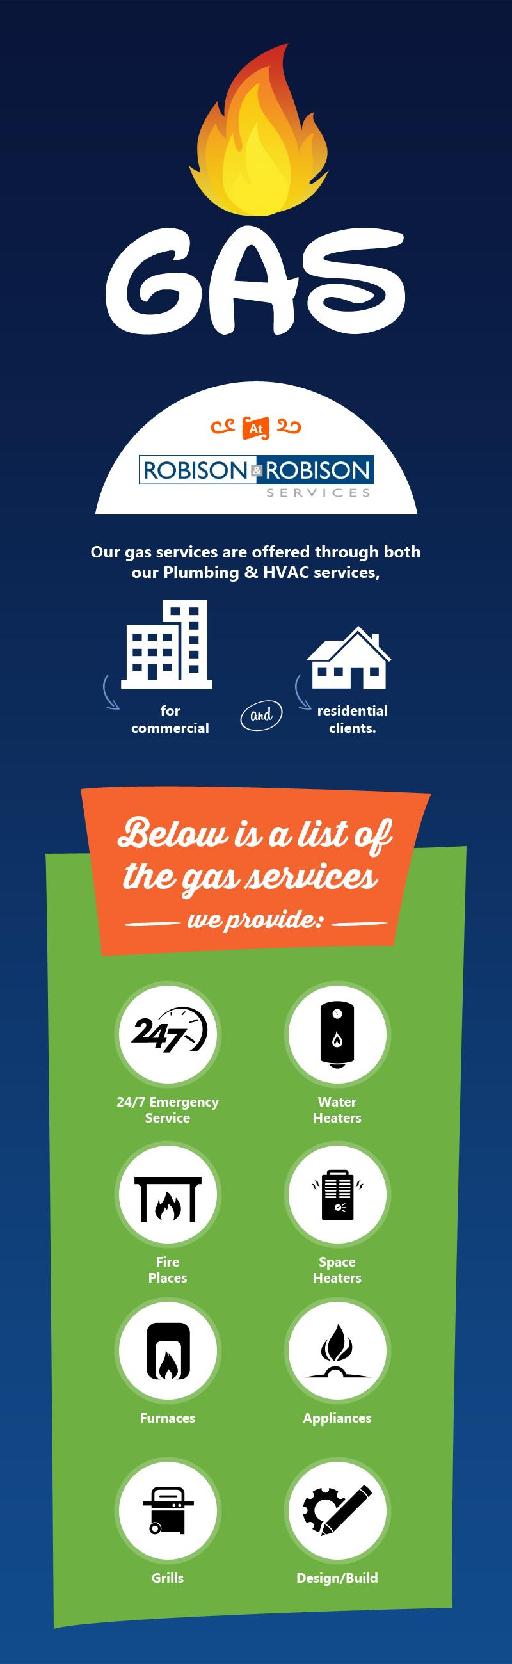 Gas Services at Robison & Robison Services